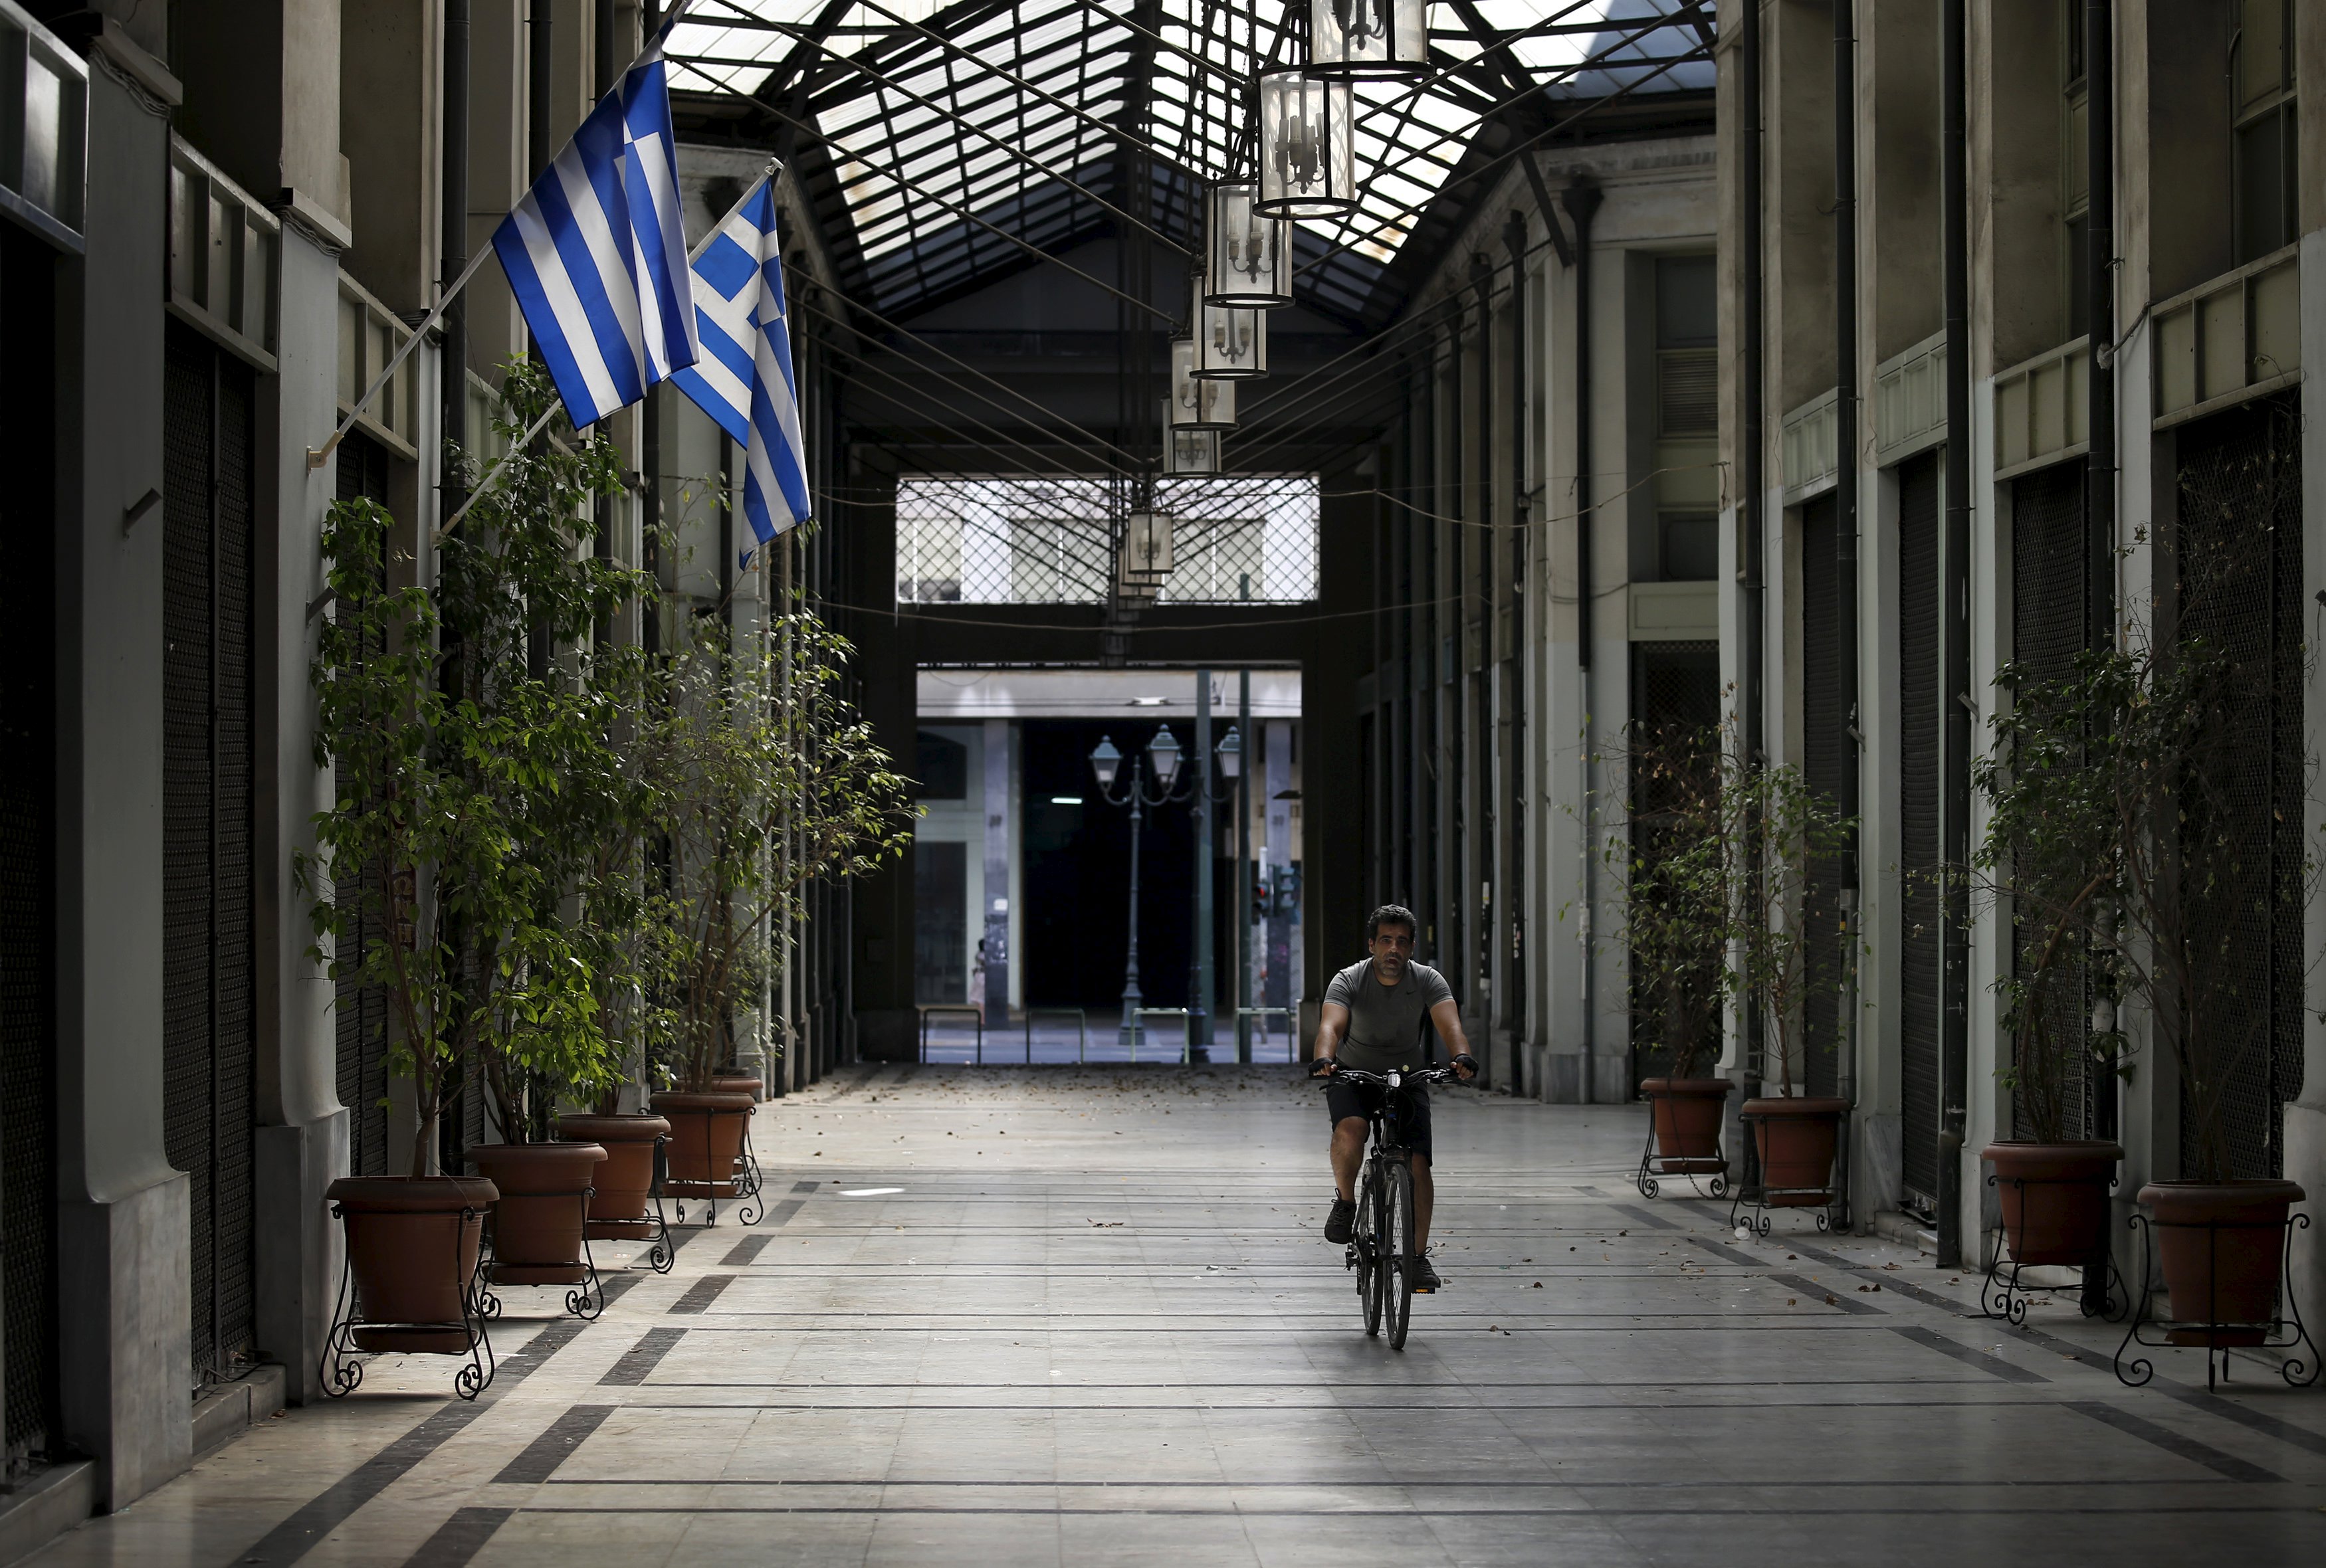 Oι δραματικές επιπτώσεις του Grexit  για την Ελλάδα